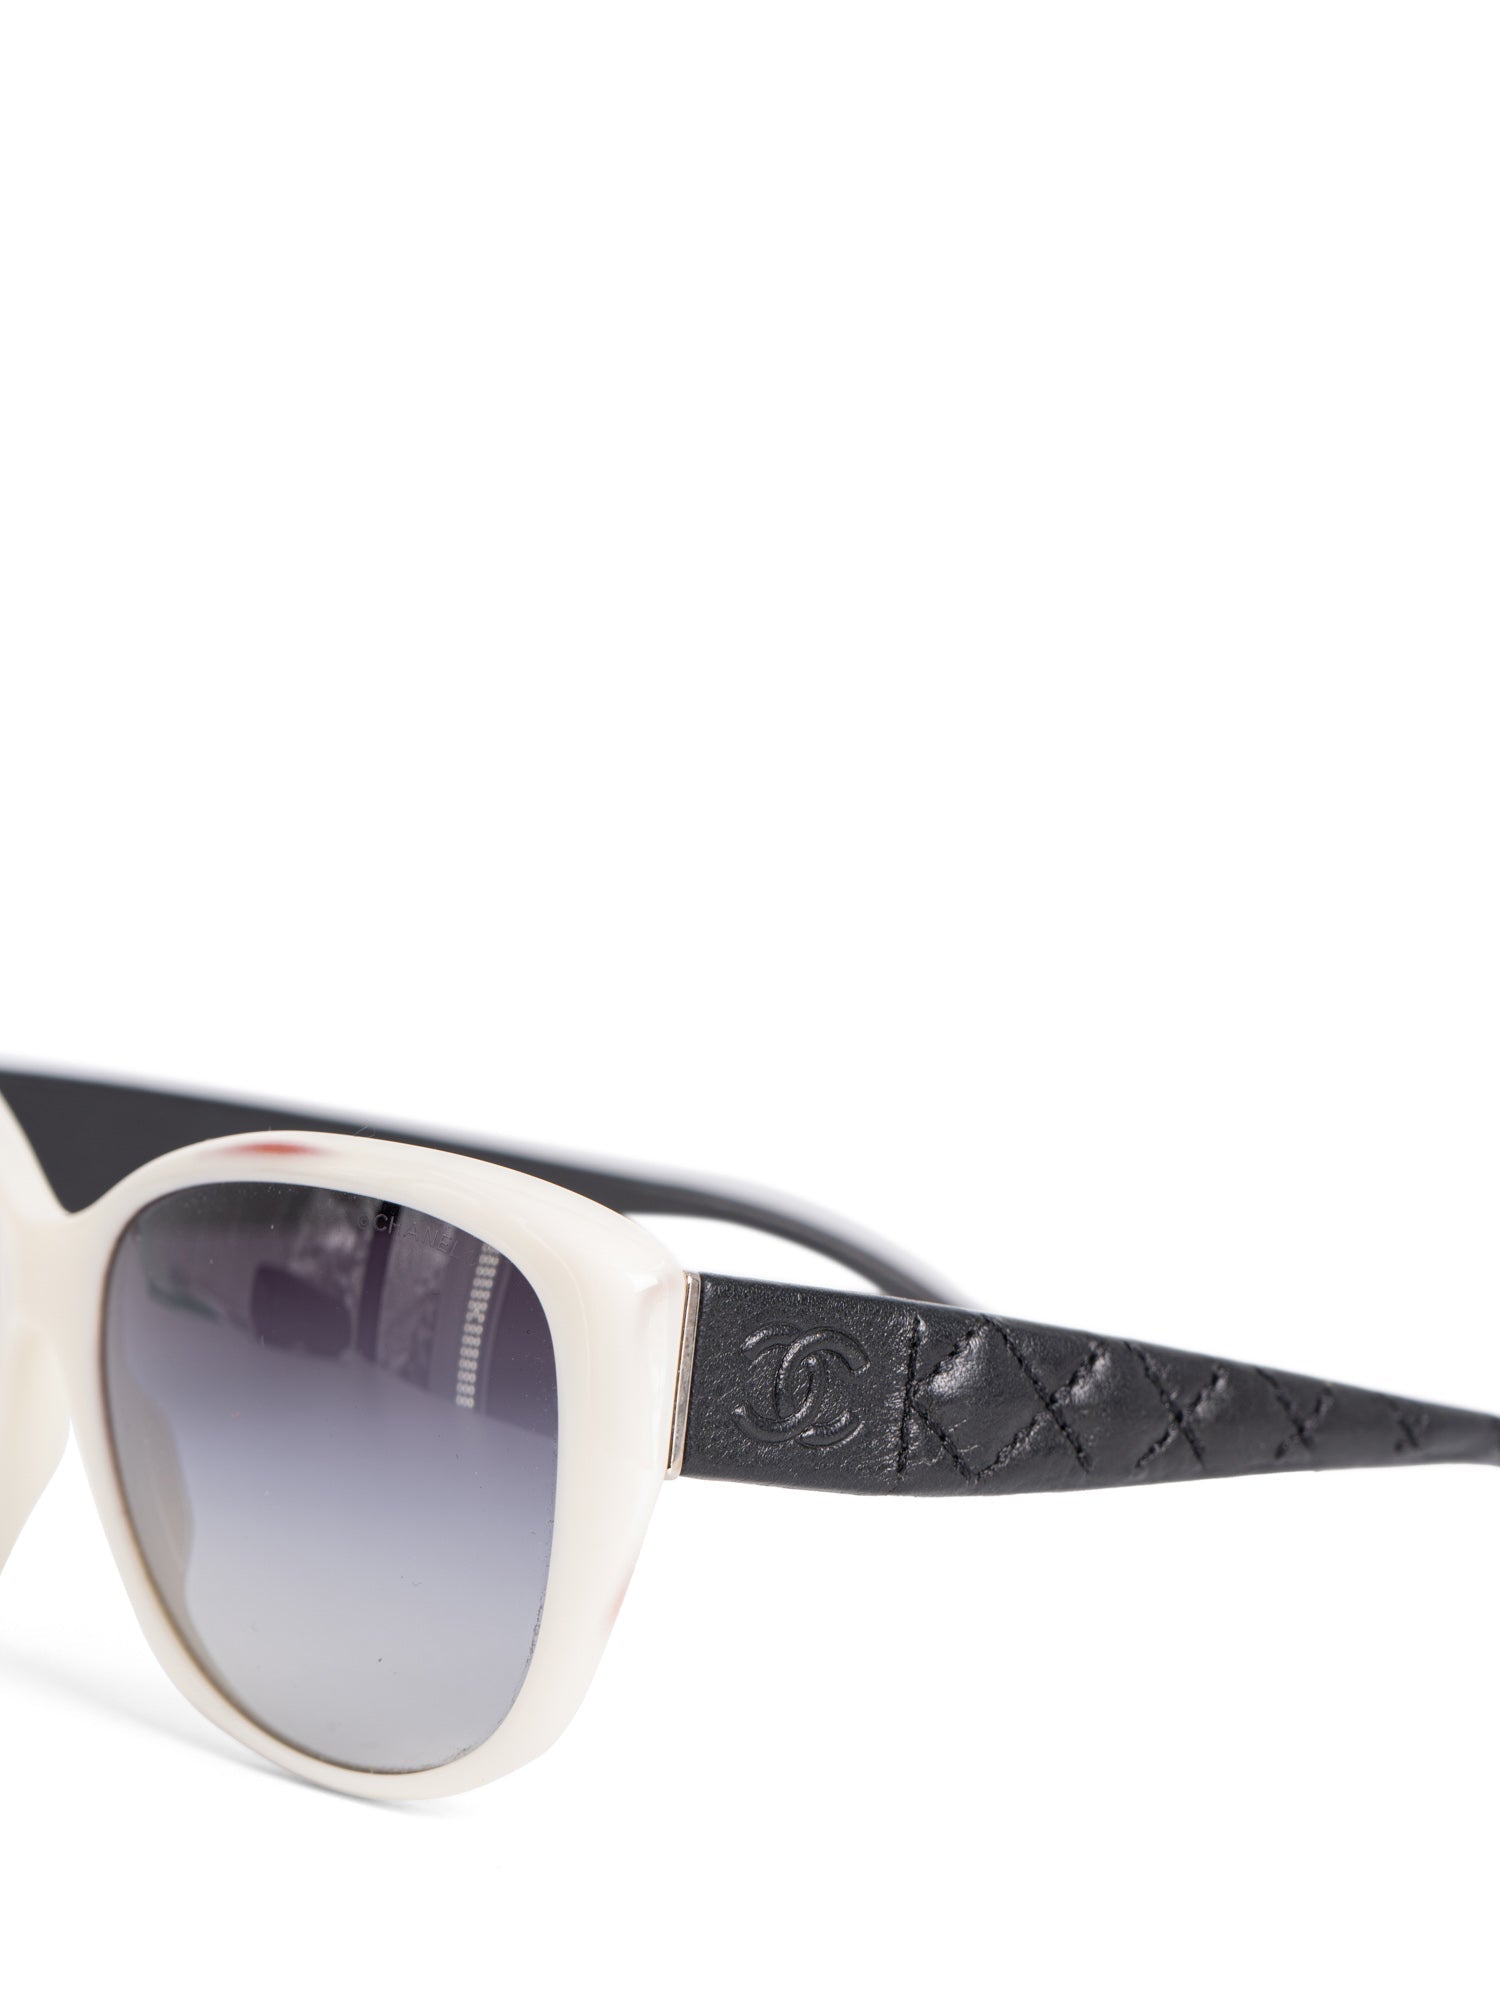 CHANEL CC Logo Leather Sunglasses Black White-designer resale